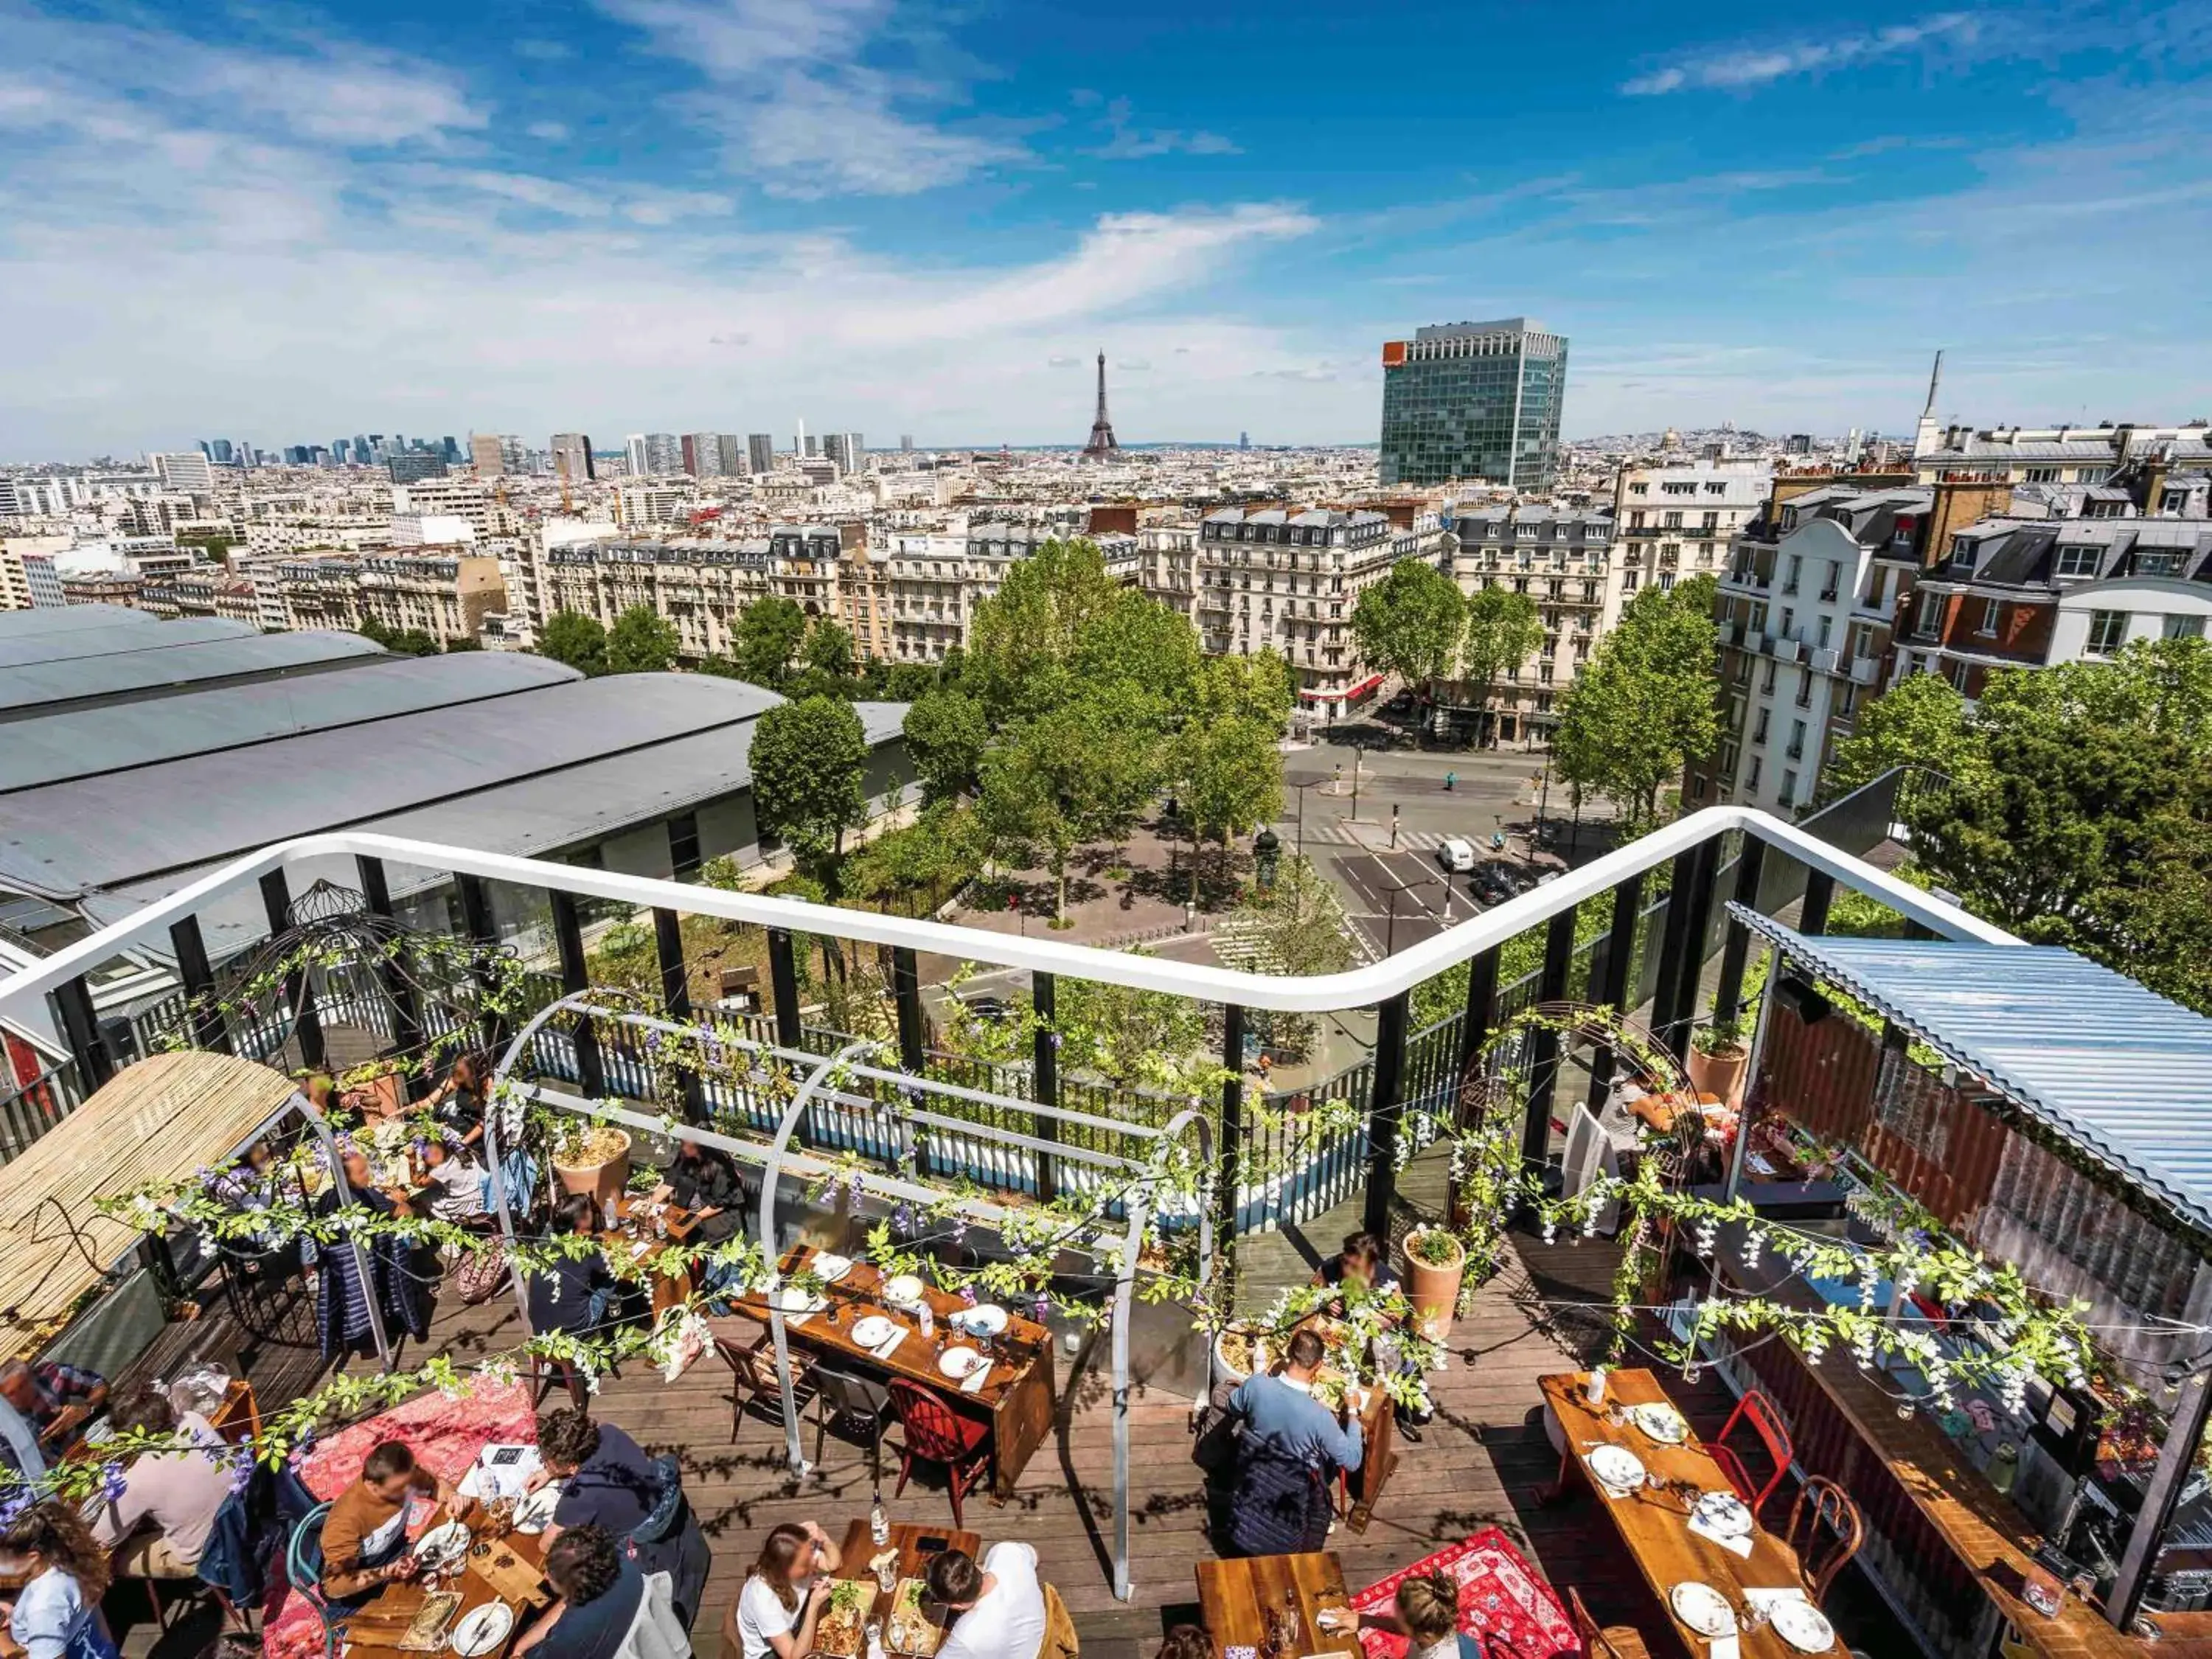 Restaurant/places to eat in Novotel Paris Porte Versailles